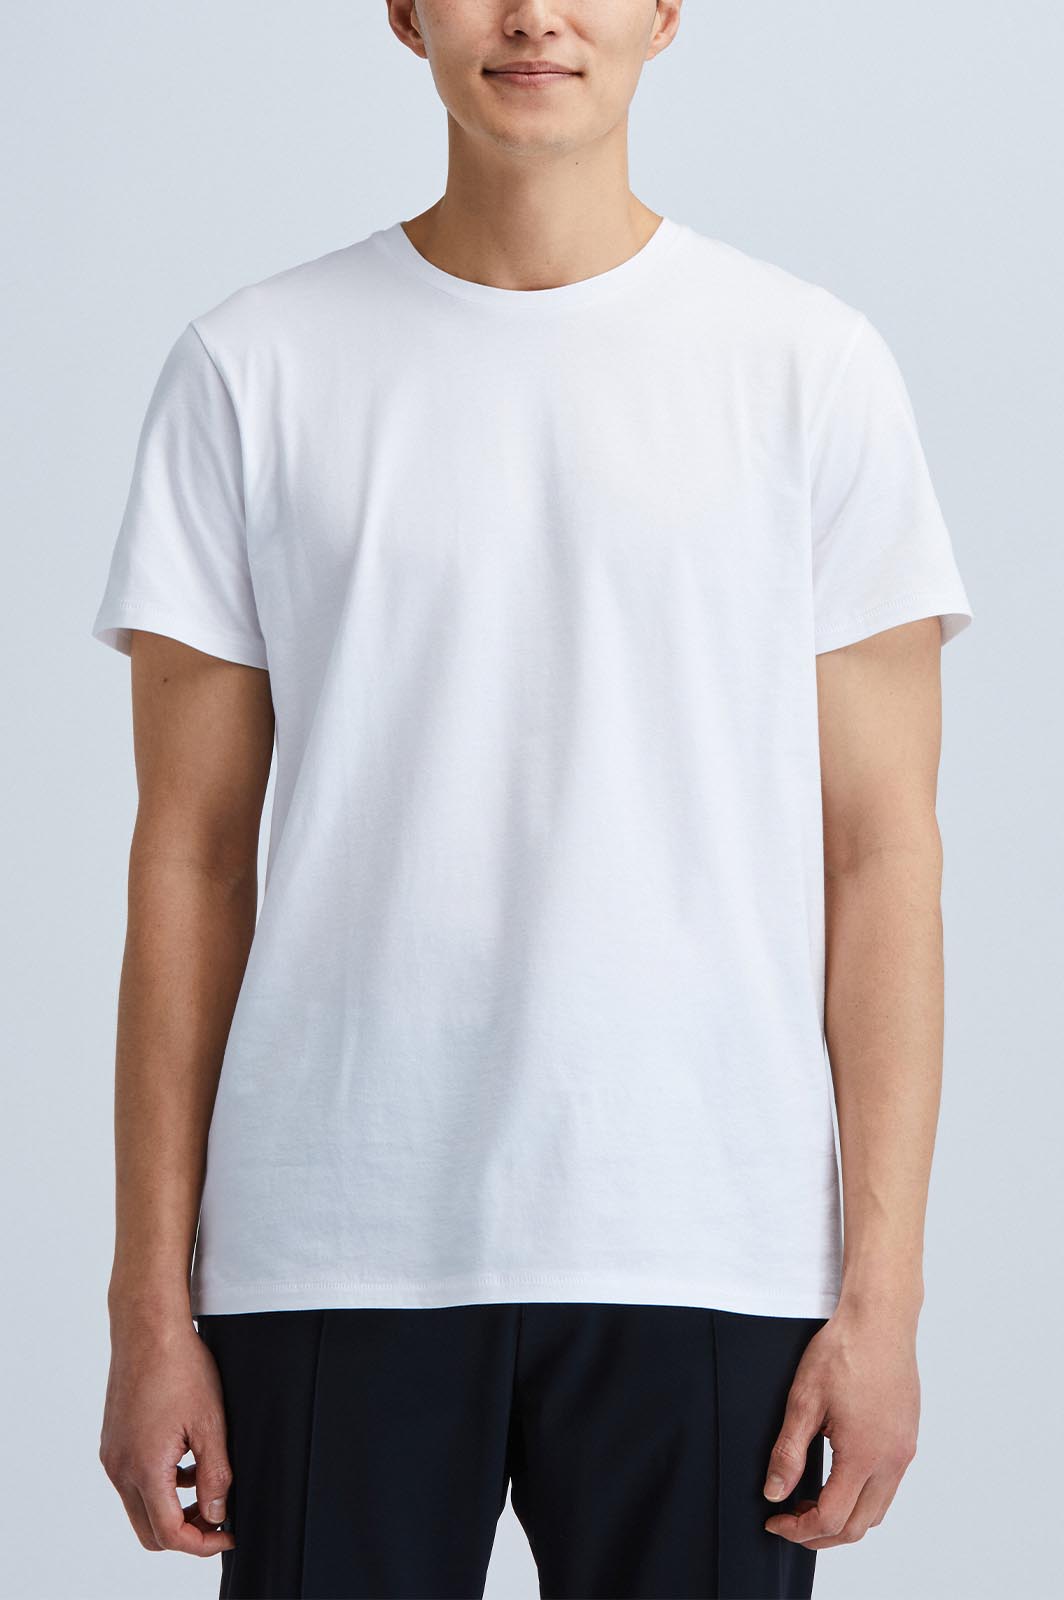 Sustainable Men's White Plain T-shirt - State of Matter Apparel